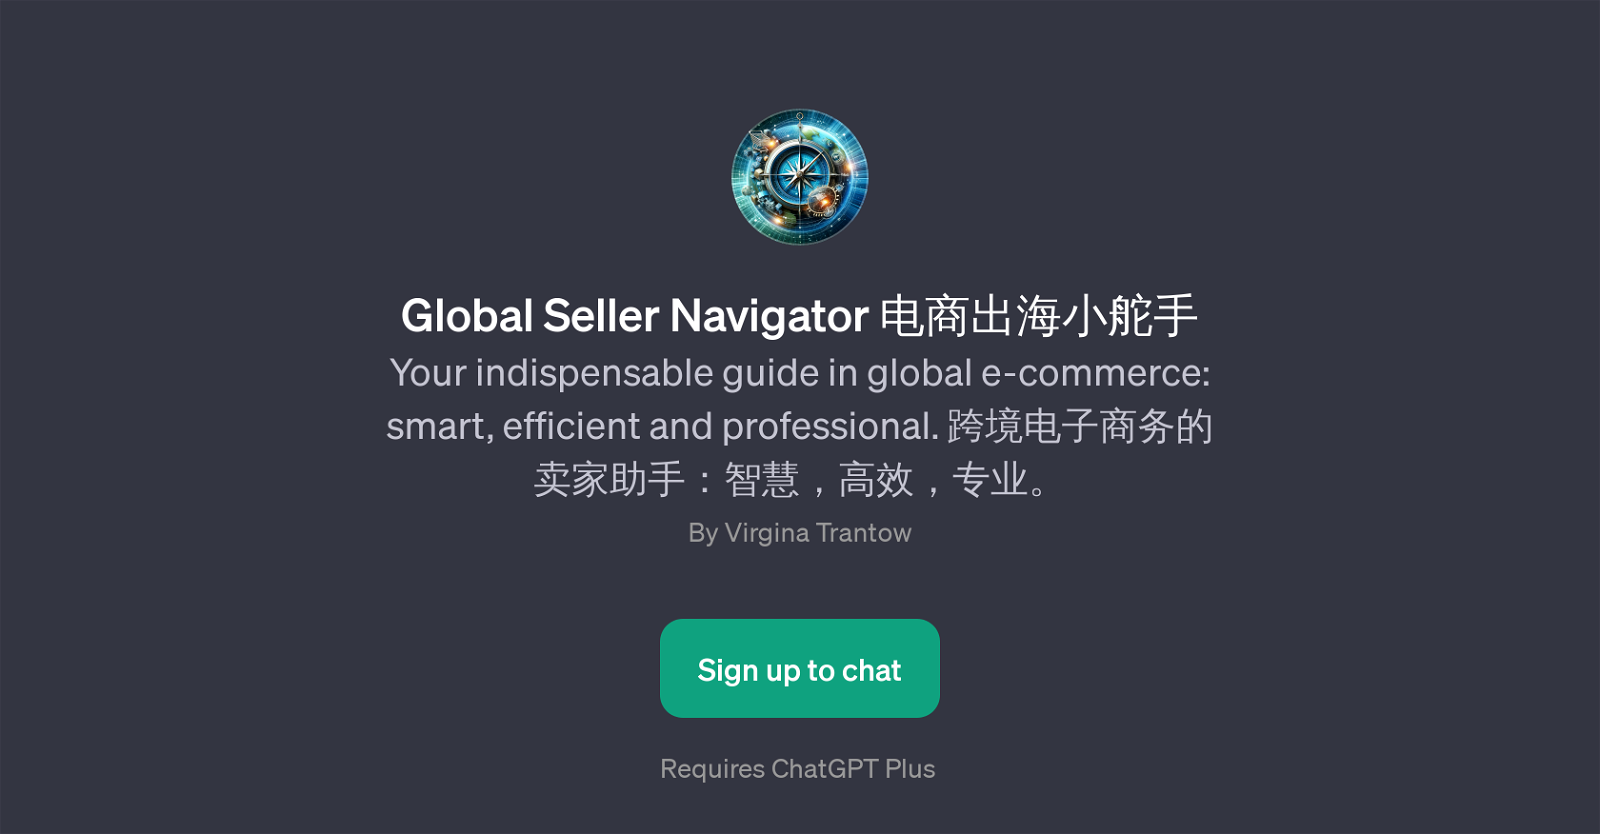 Global Seller Navigator website